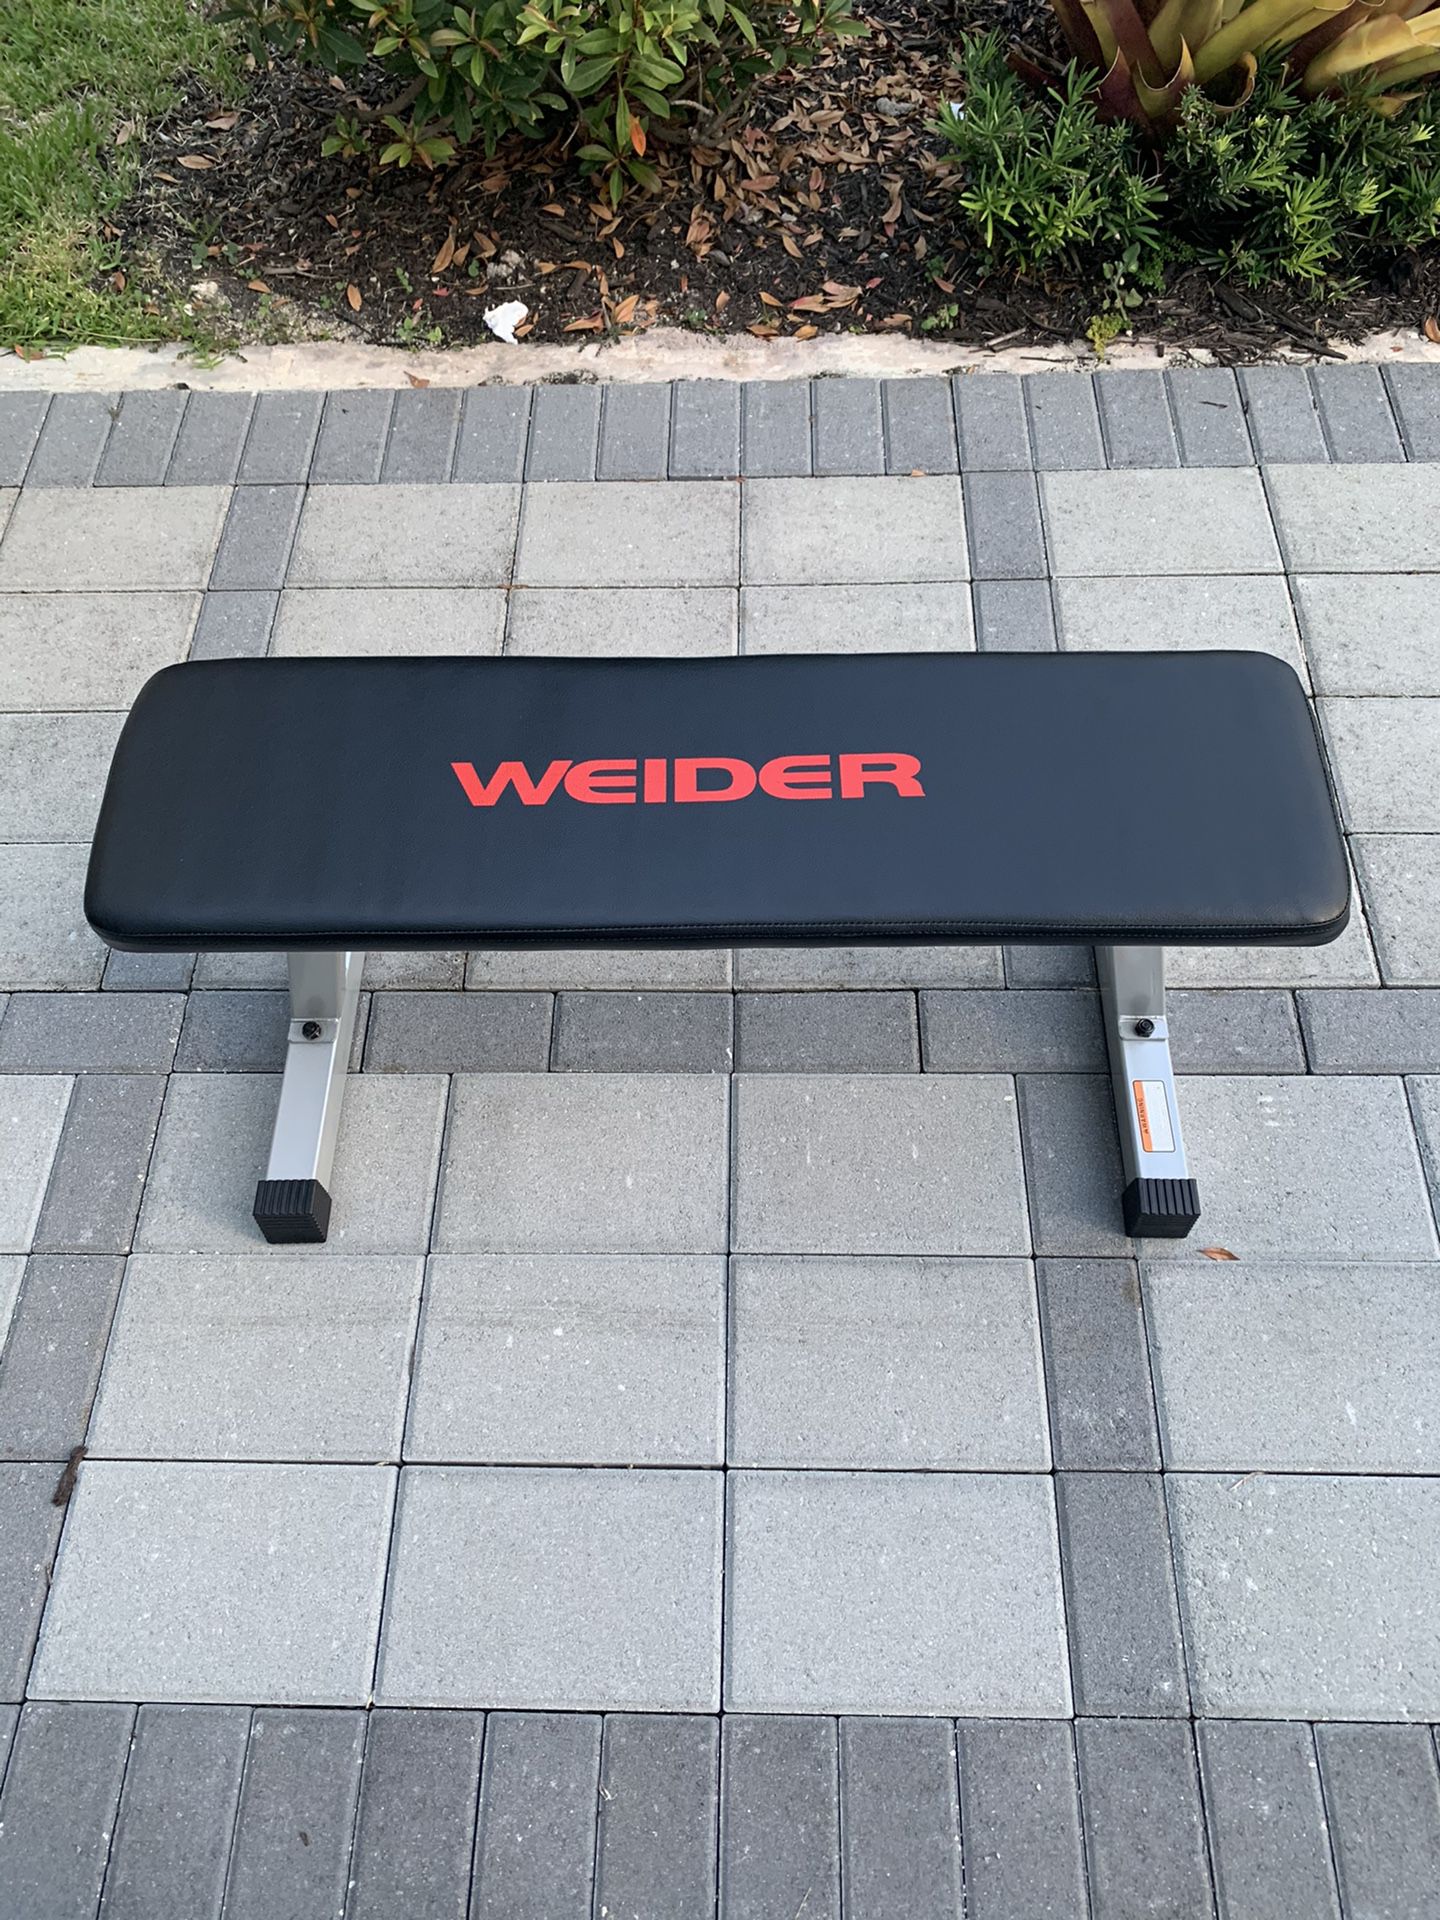 Brand new weider flat bench